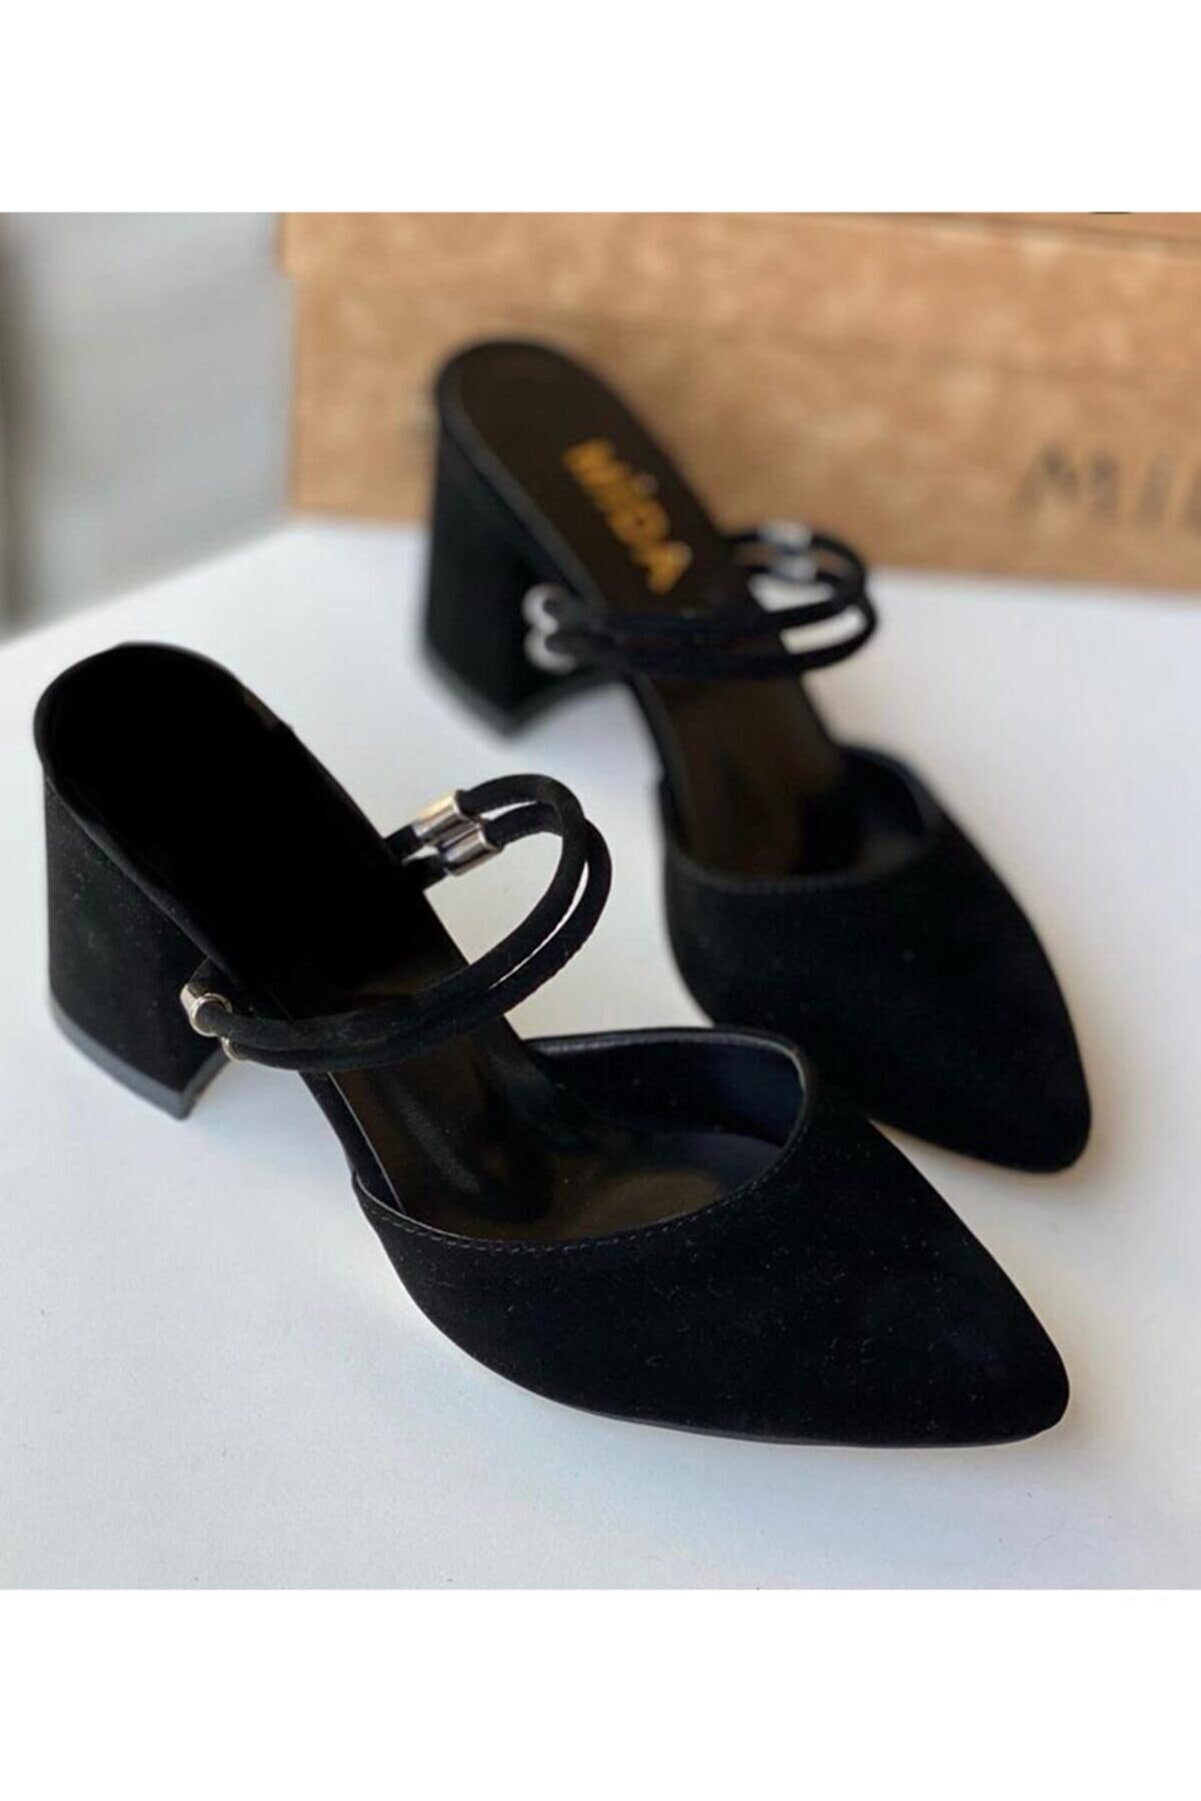 BY MAY SHOES Kadın Siyah Süet Topuklu Ip Sandalet Terlik Ayakkabı